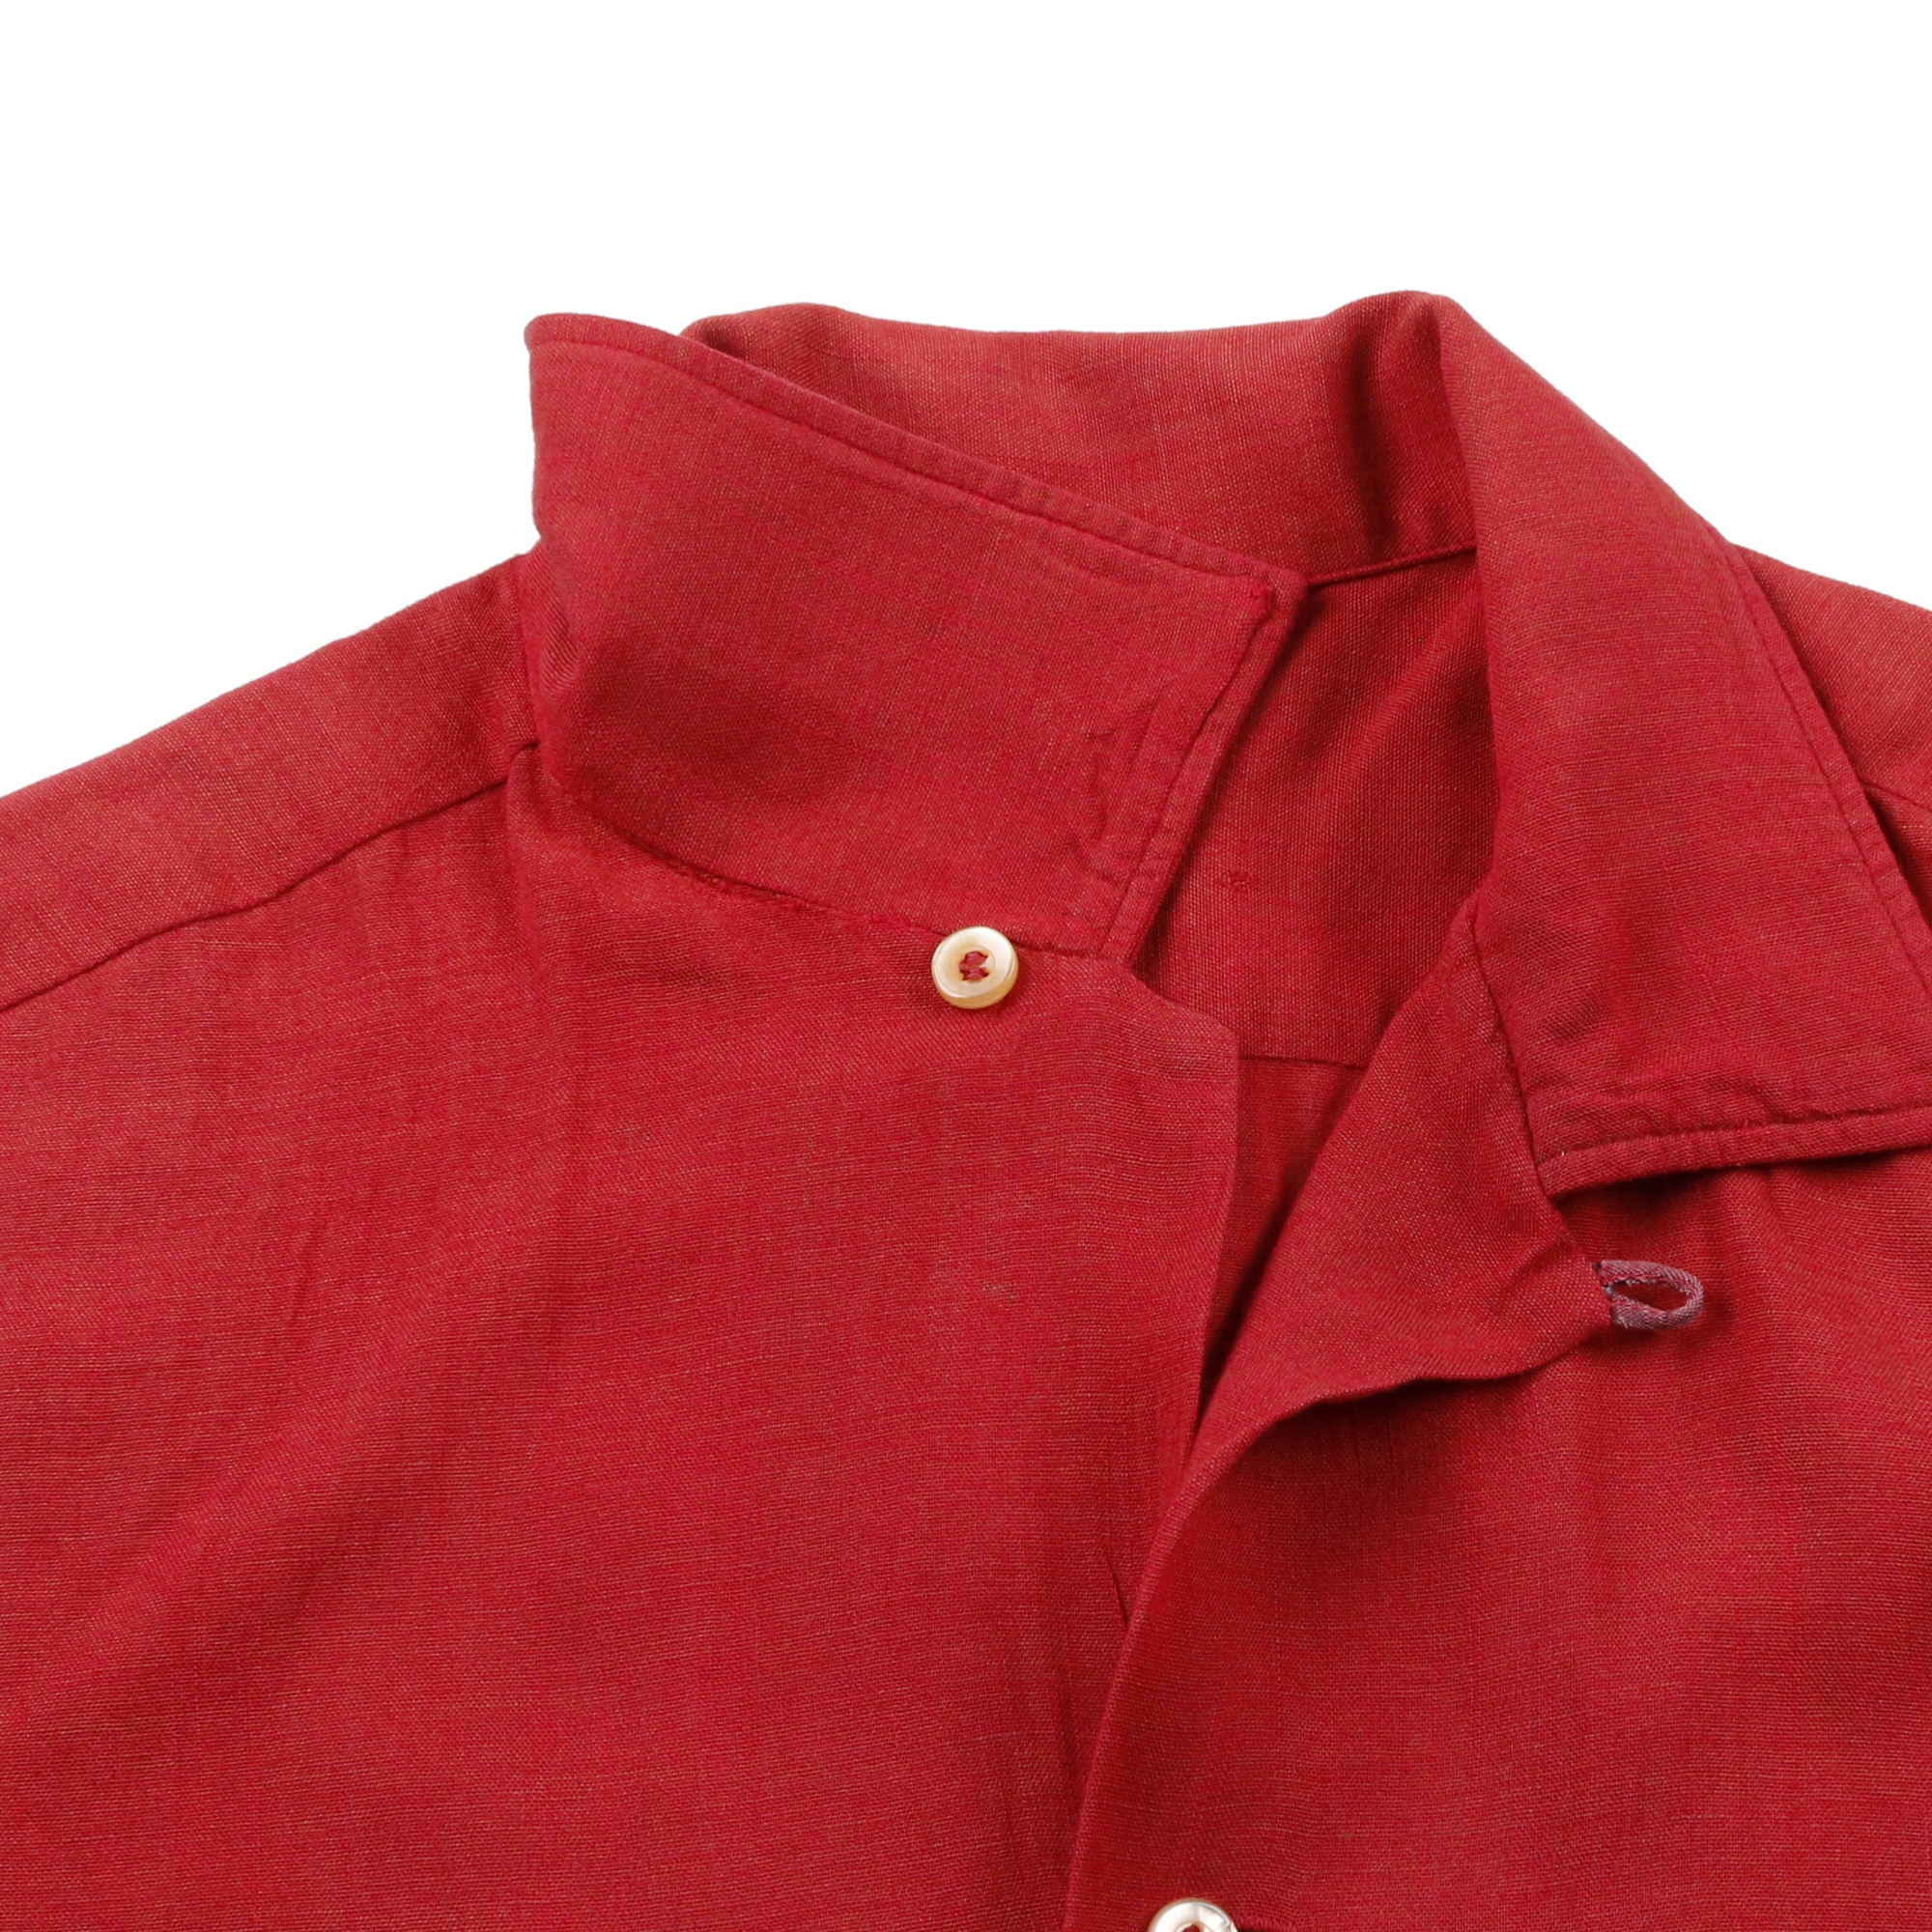 60s ヴィンテージ ボウリングシャツ 刺繍 チェーンステッチ 半袖 S/S レーヨン 赤 レッド S程